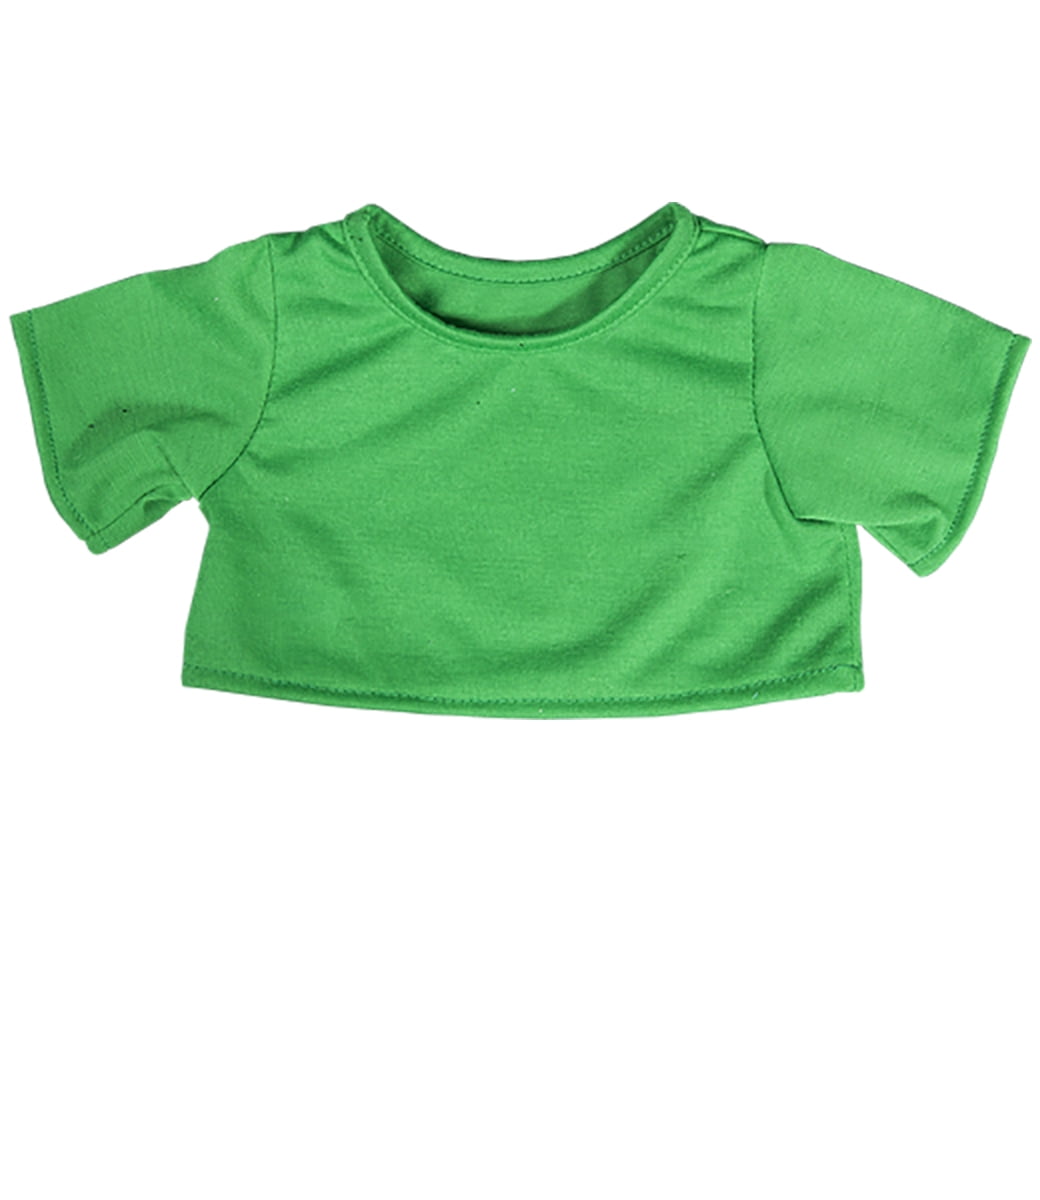 SMALL GREEN CLOTH T-SHIRT FOR TEDDY BEAR OR DOLL